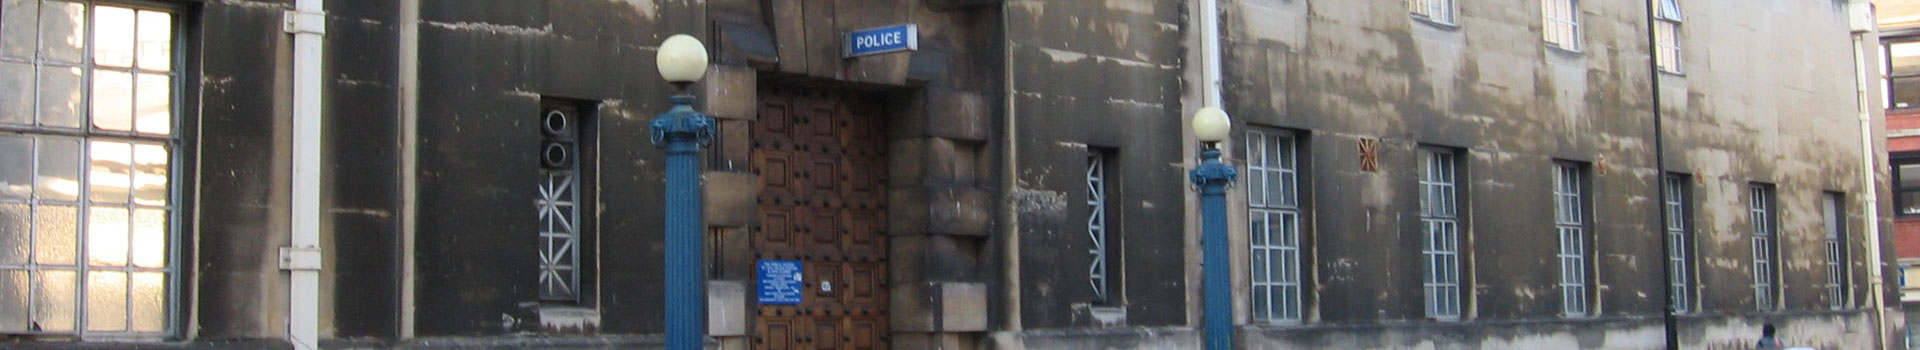 Police Station - Bristol